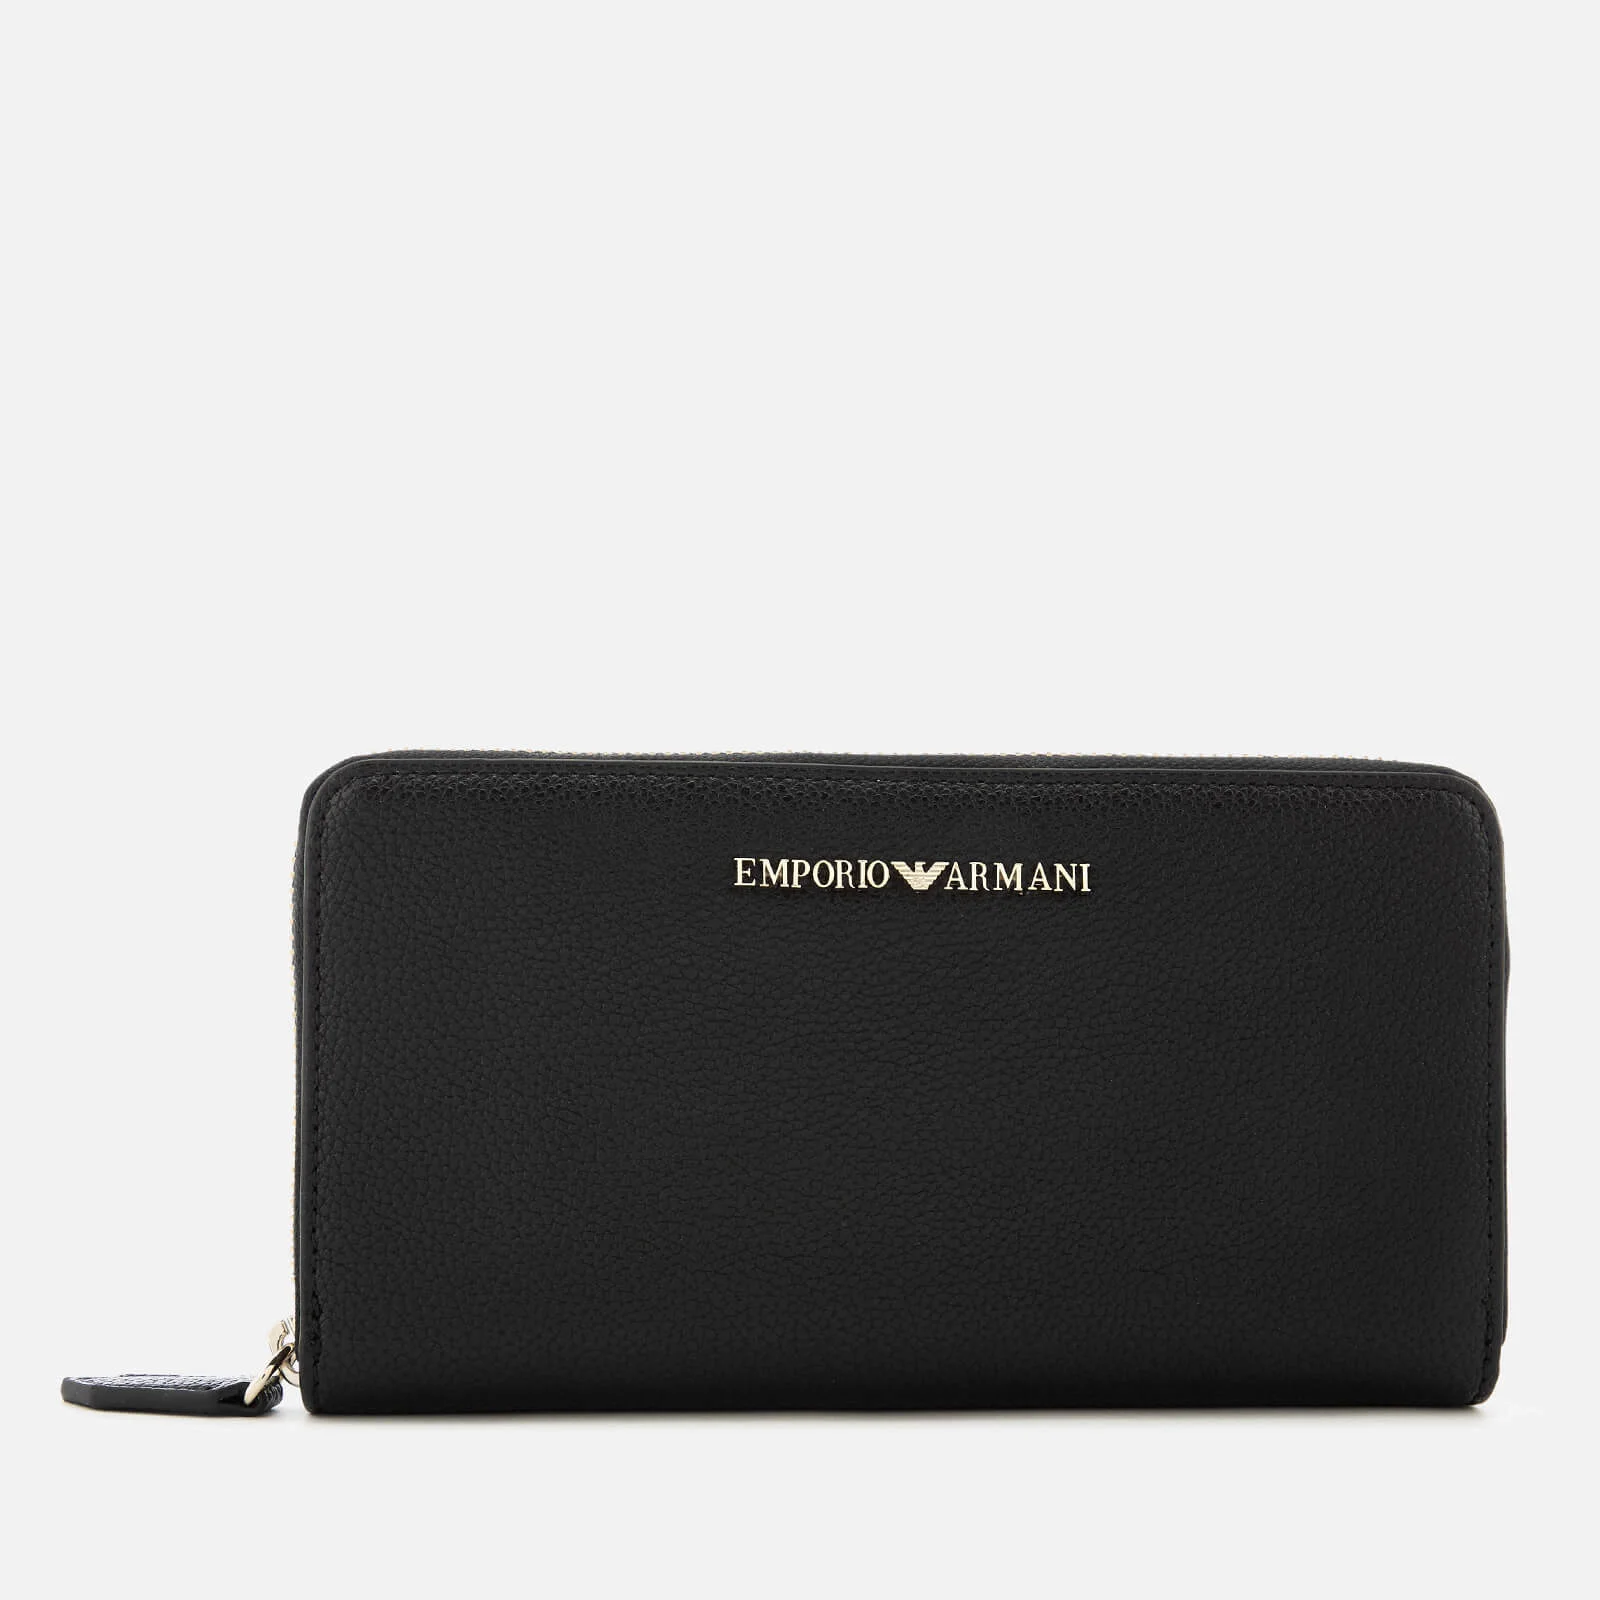 Emporio Armani Women's Zip Around Wallet - Black Image 1